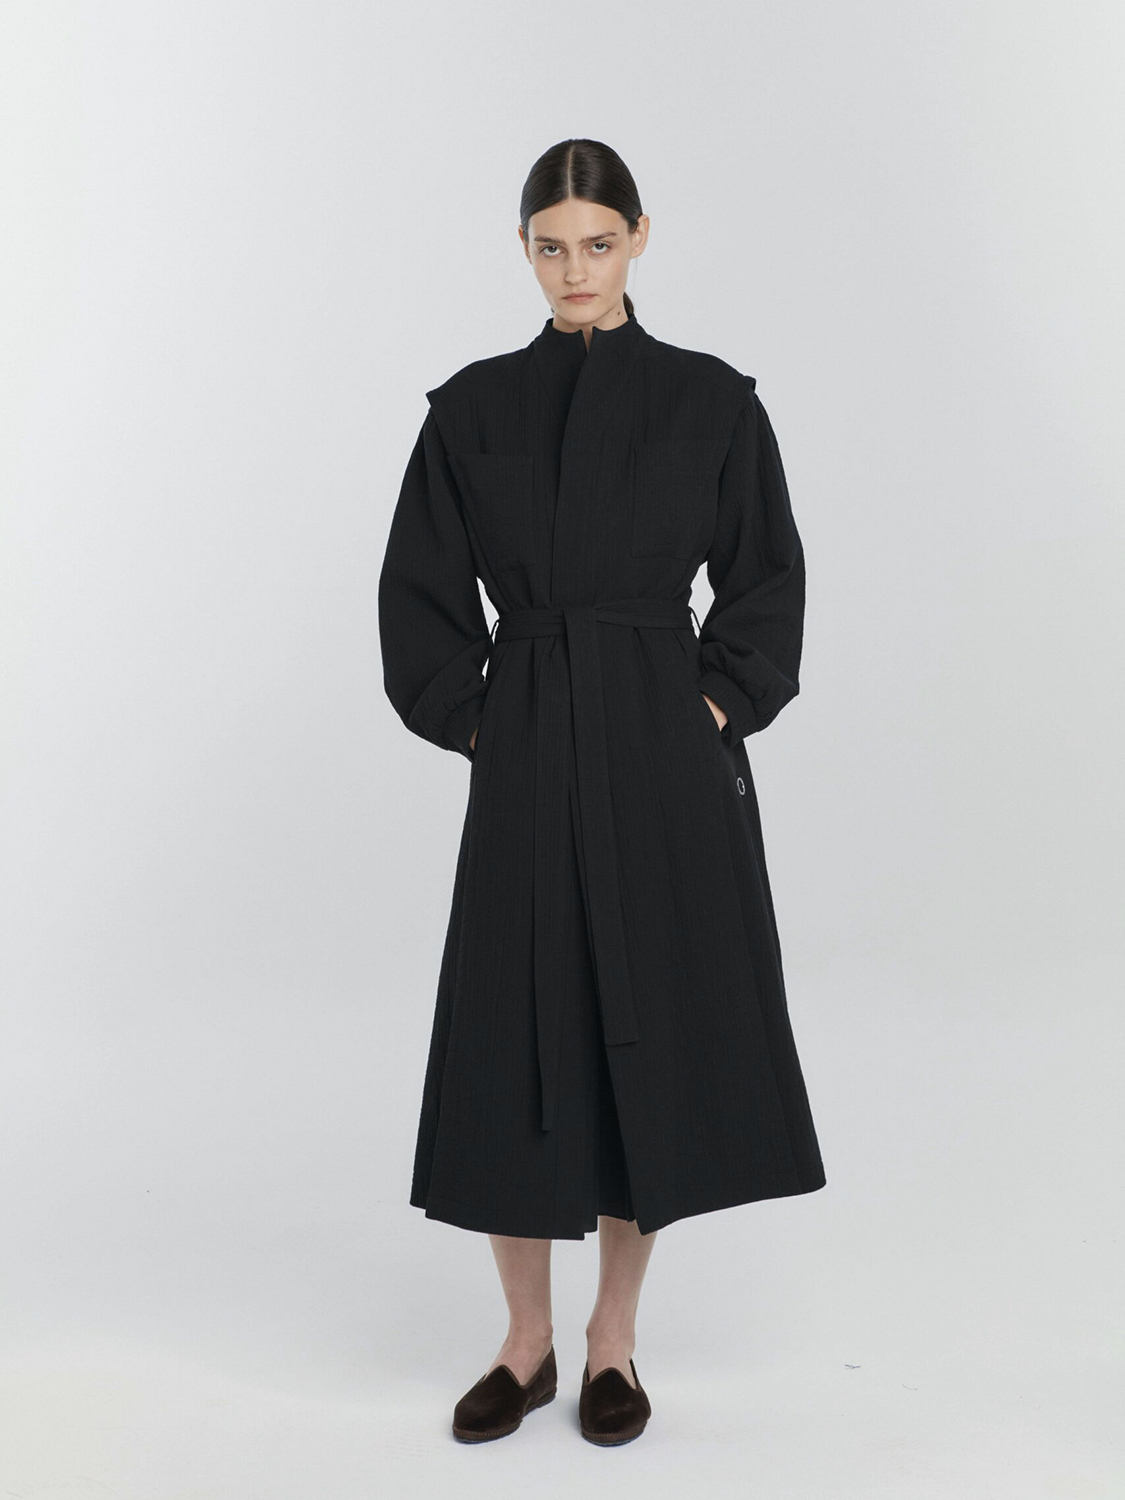 Sole cotton quilted pinstripe coat - Ania Kuczyńska